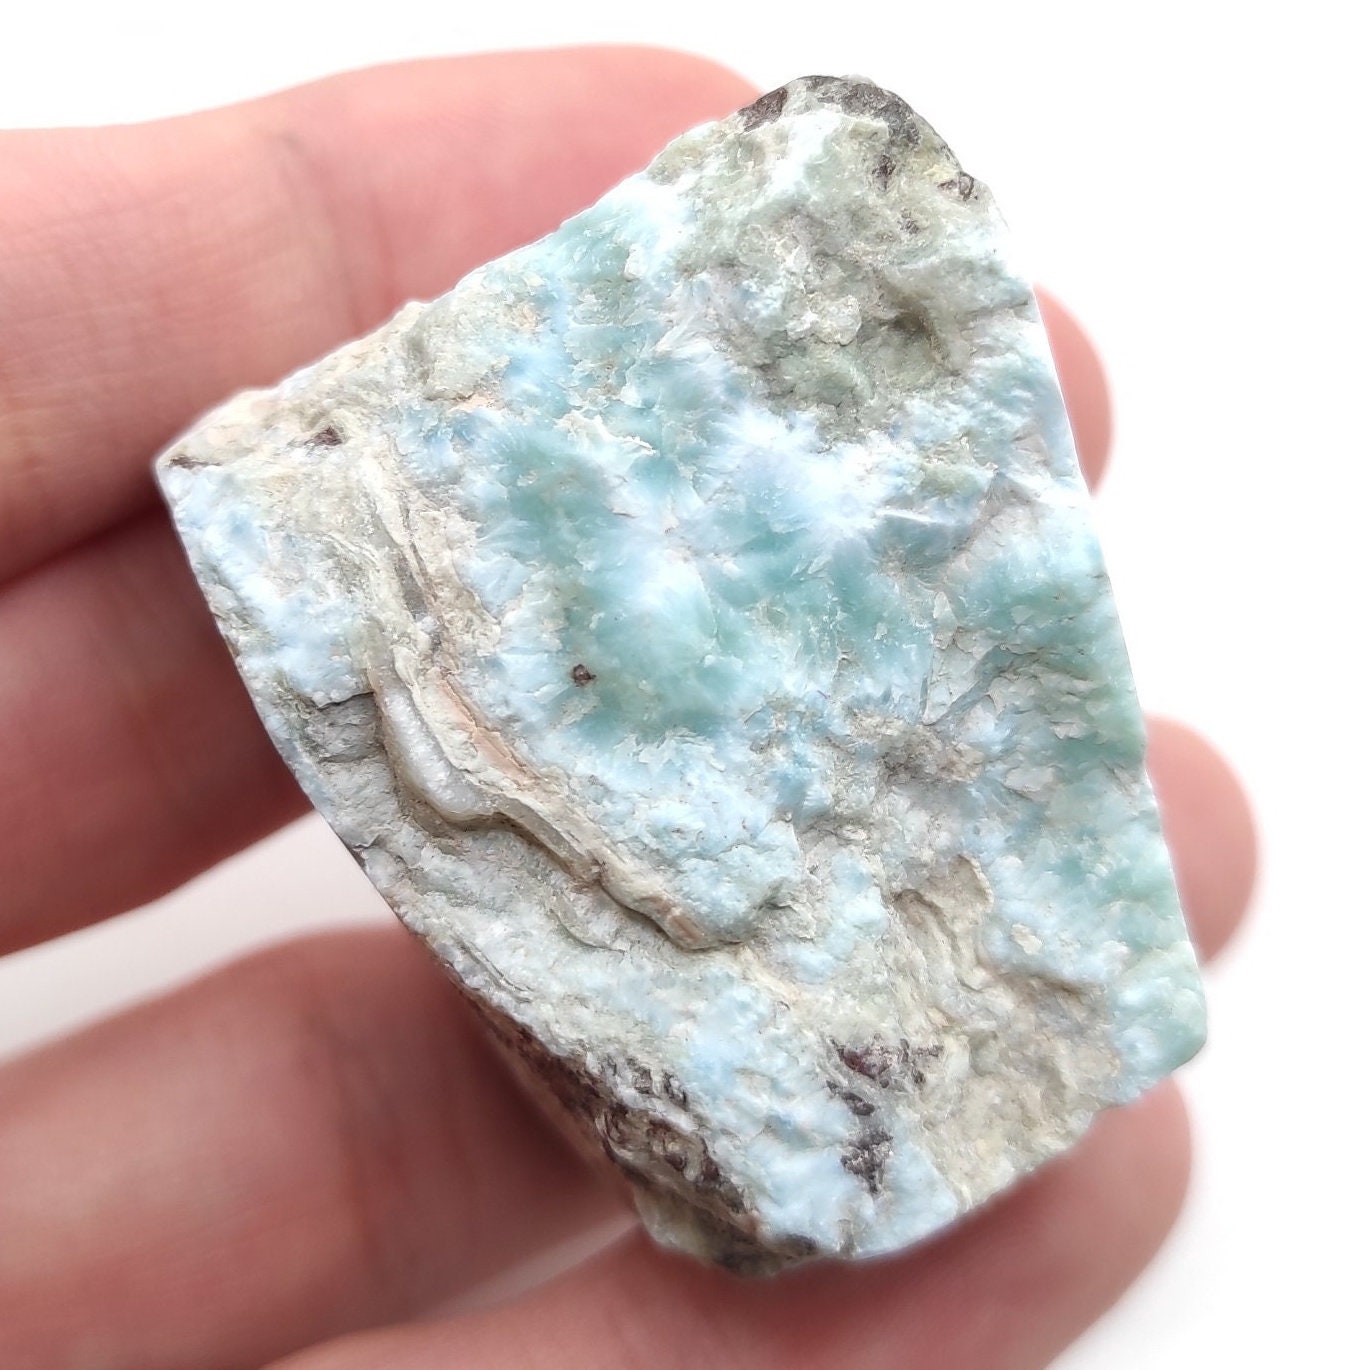 77g Larimar Freeform - Polished and Raw - Sky Blue Larimar - Barahona, Dominican Republic - Rare Larimar Crystal - Hand Polished Larimar